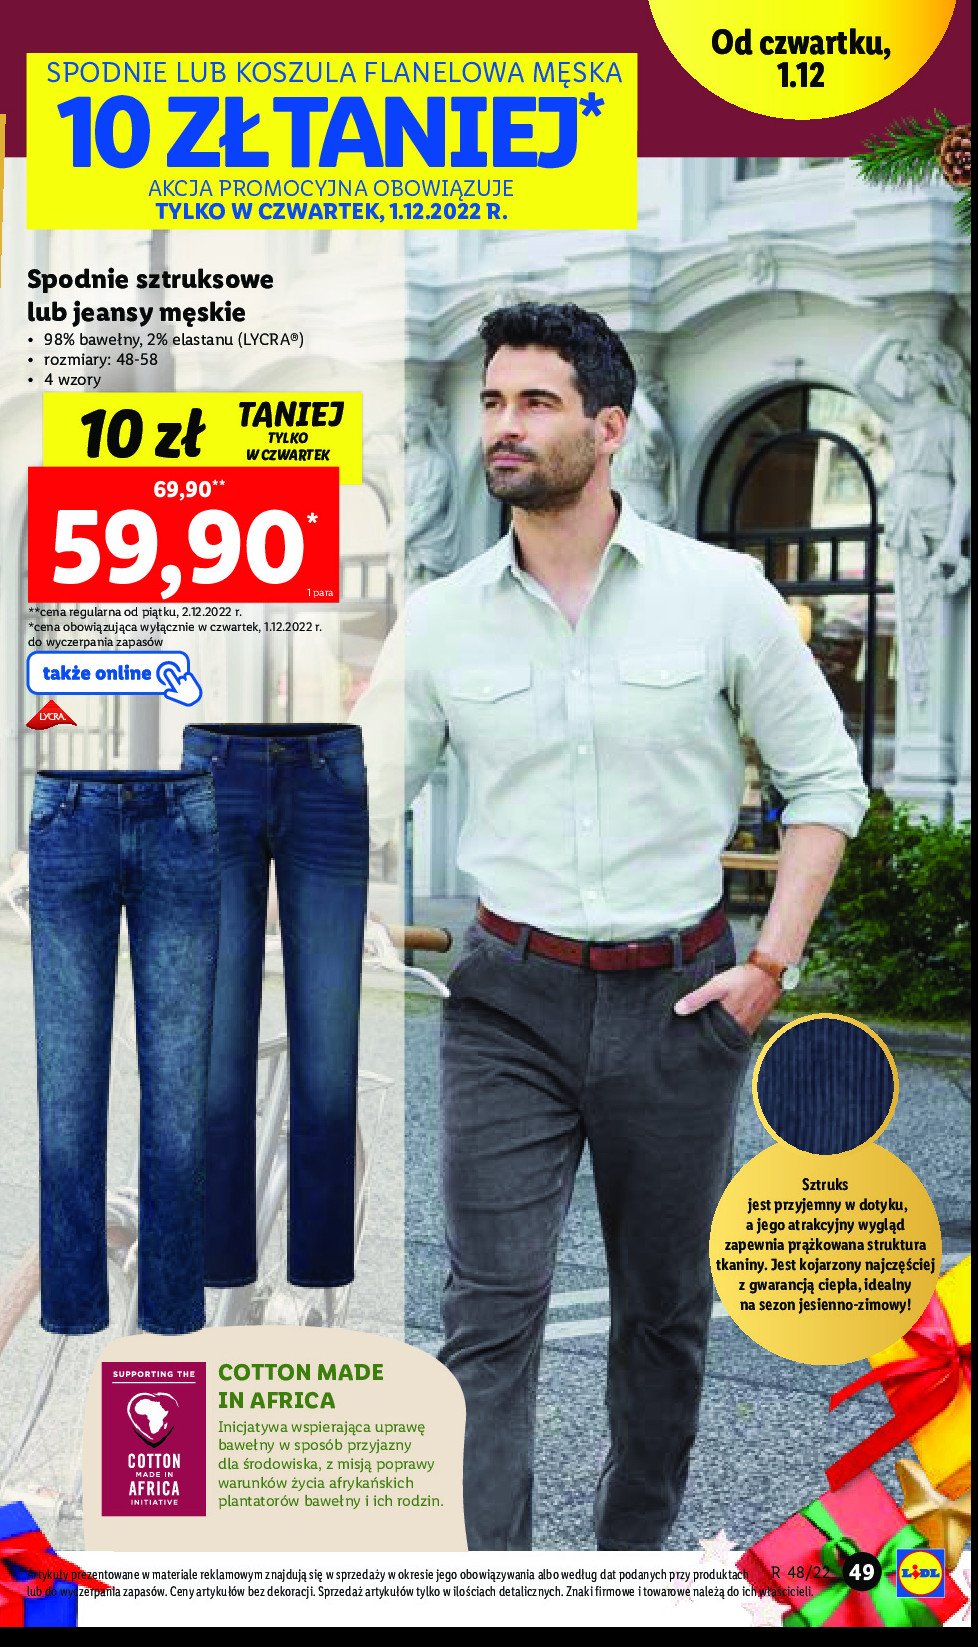 Spodnie jeans męskie CHEROKEE promocja